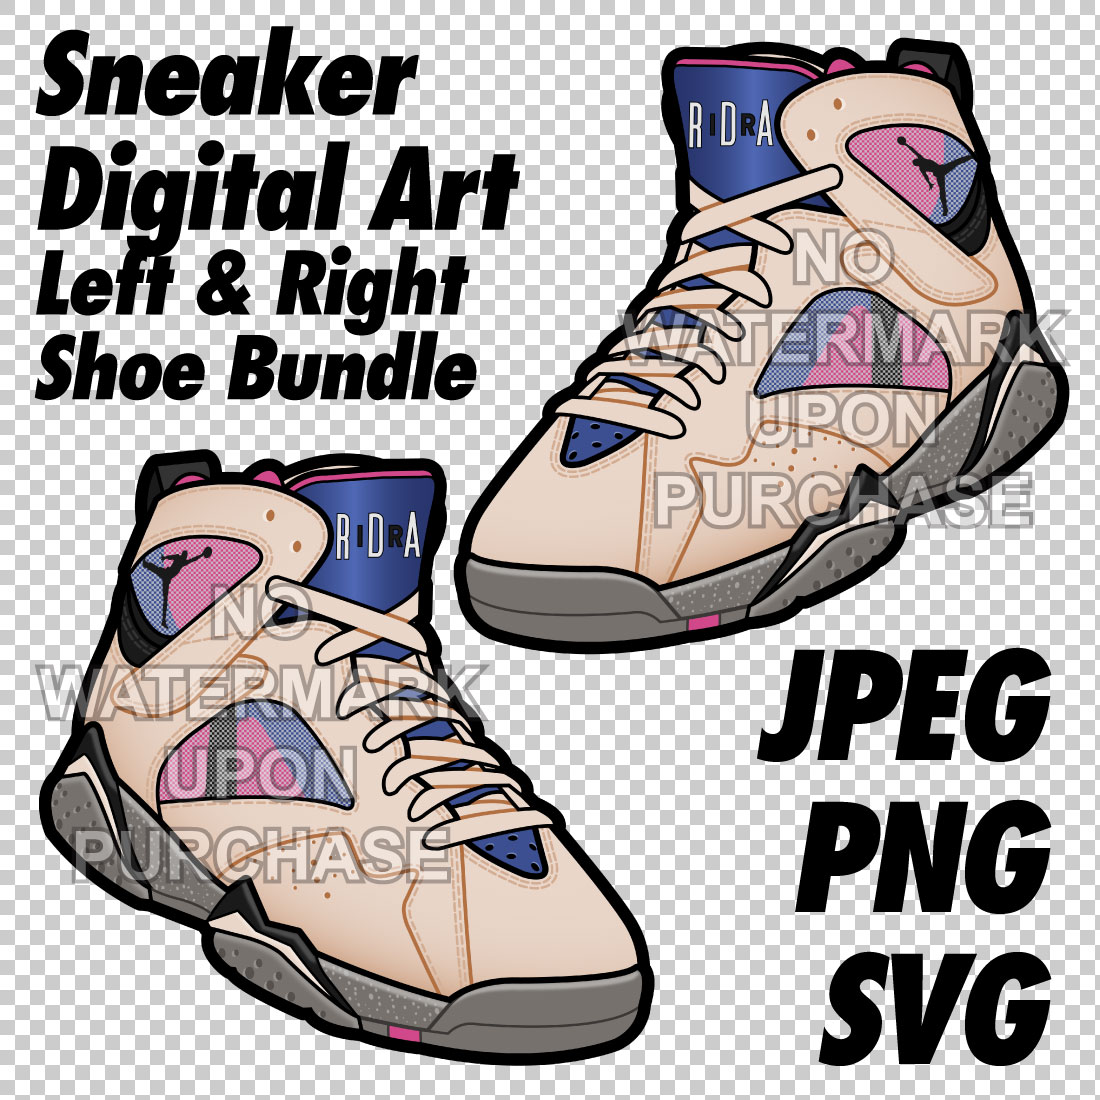 Air Jordan 7 Sapphire JPEG PNG SVG right & left shoe bundle digital download cover image.